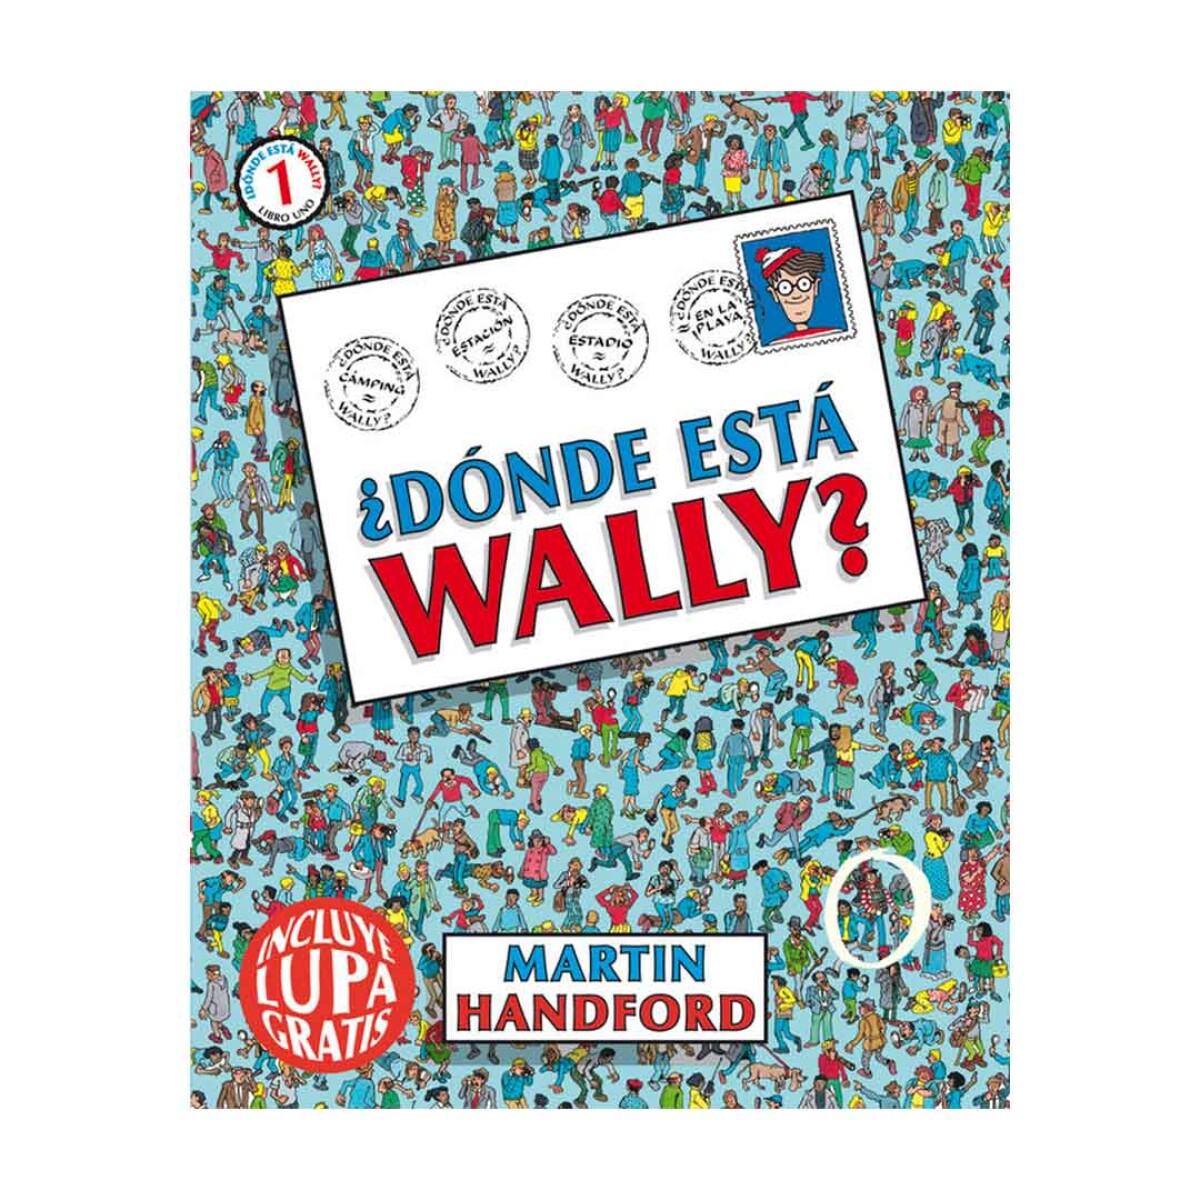 Mini Libro Donde esta Wally? by Martin Handford - 001 